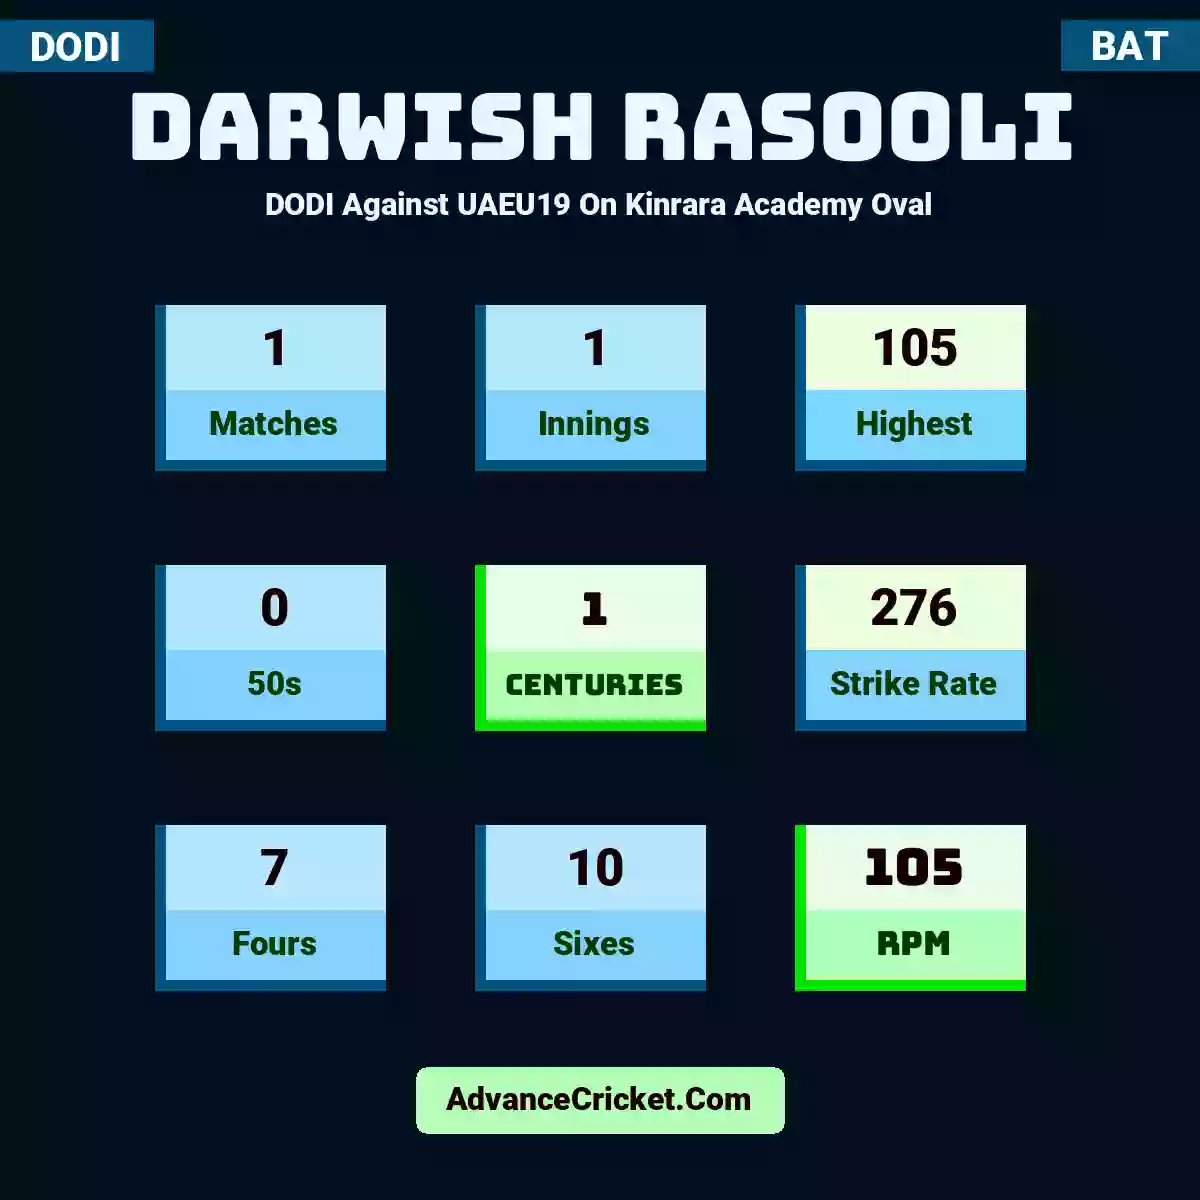 Darwish Rasooli DODI  Against UAEU19 On Kinrara Academy Oval, Darwish Rasooli played 1 matches, scored 105 runs as highest, 0 half-centuries, and 1 centuries, with a strike rate of 276. D.Rasooli hit 7 fours and 10 sixes, with an RPM of 105.